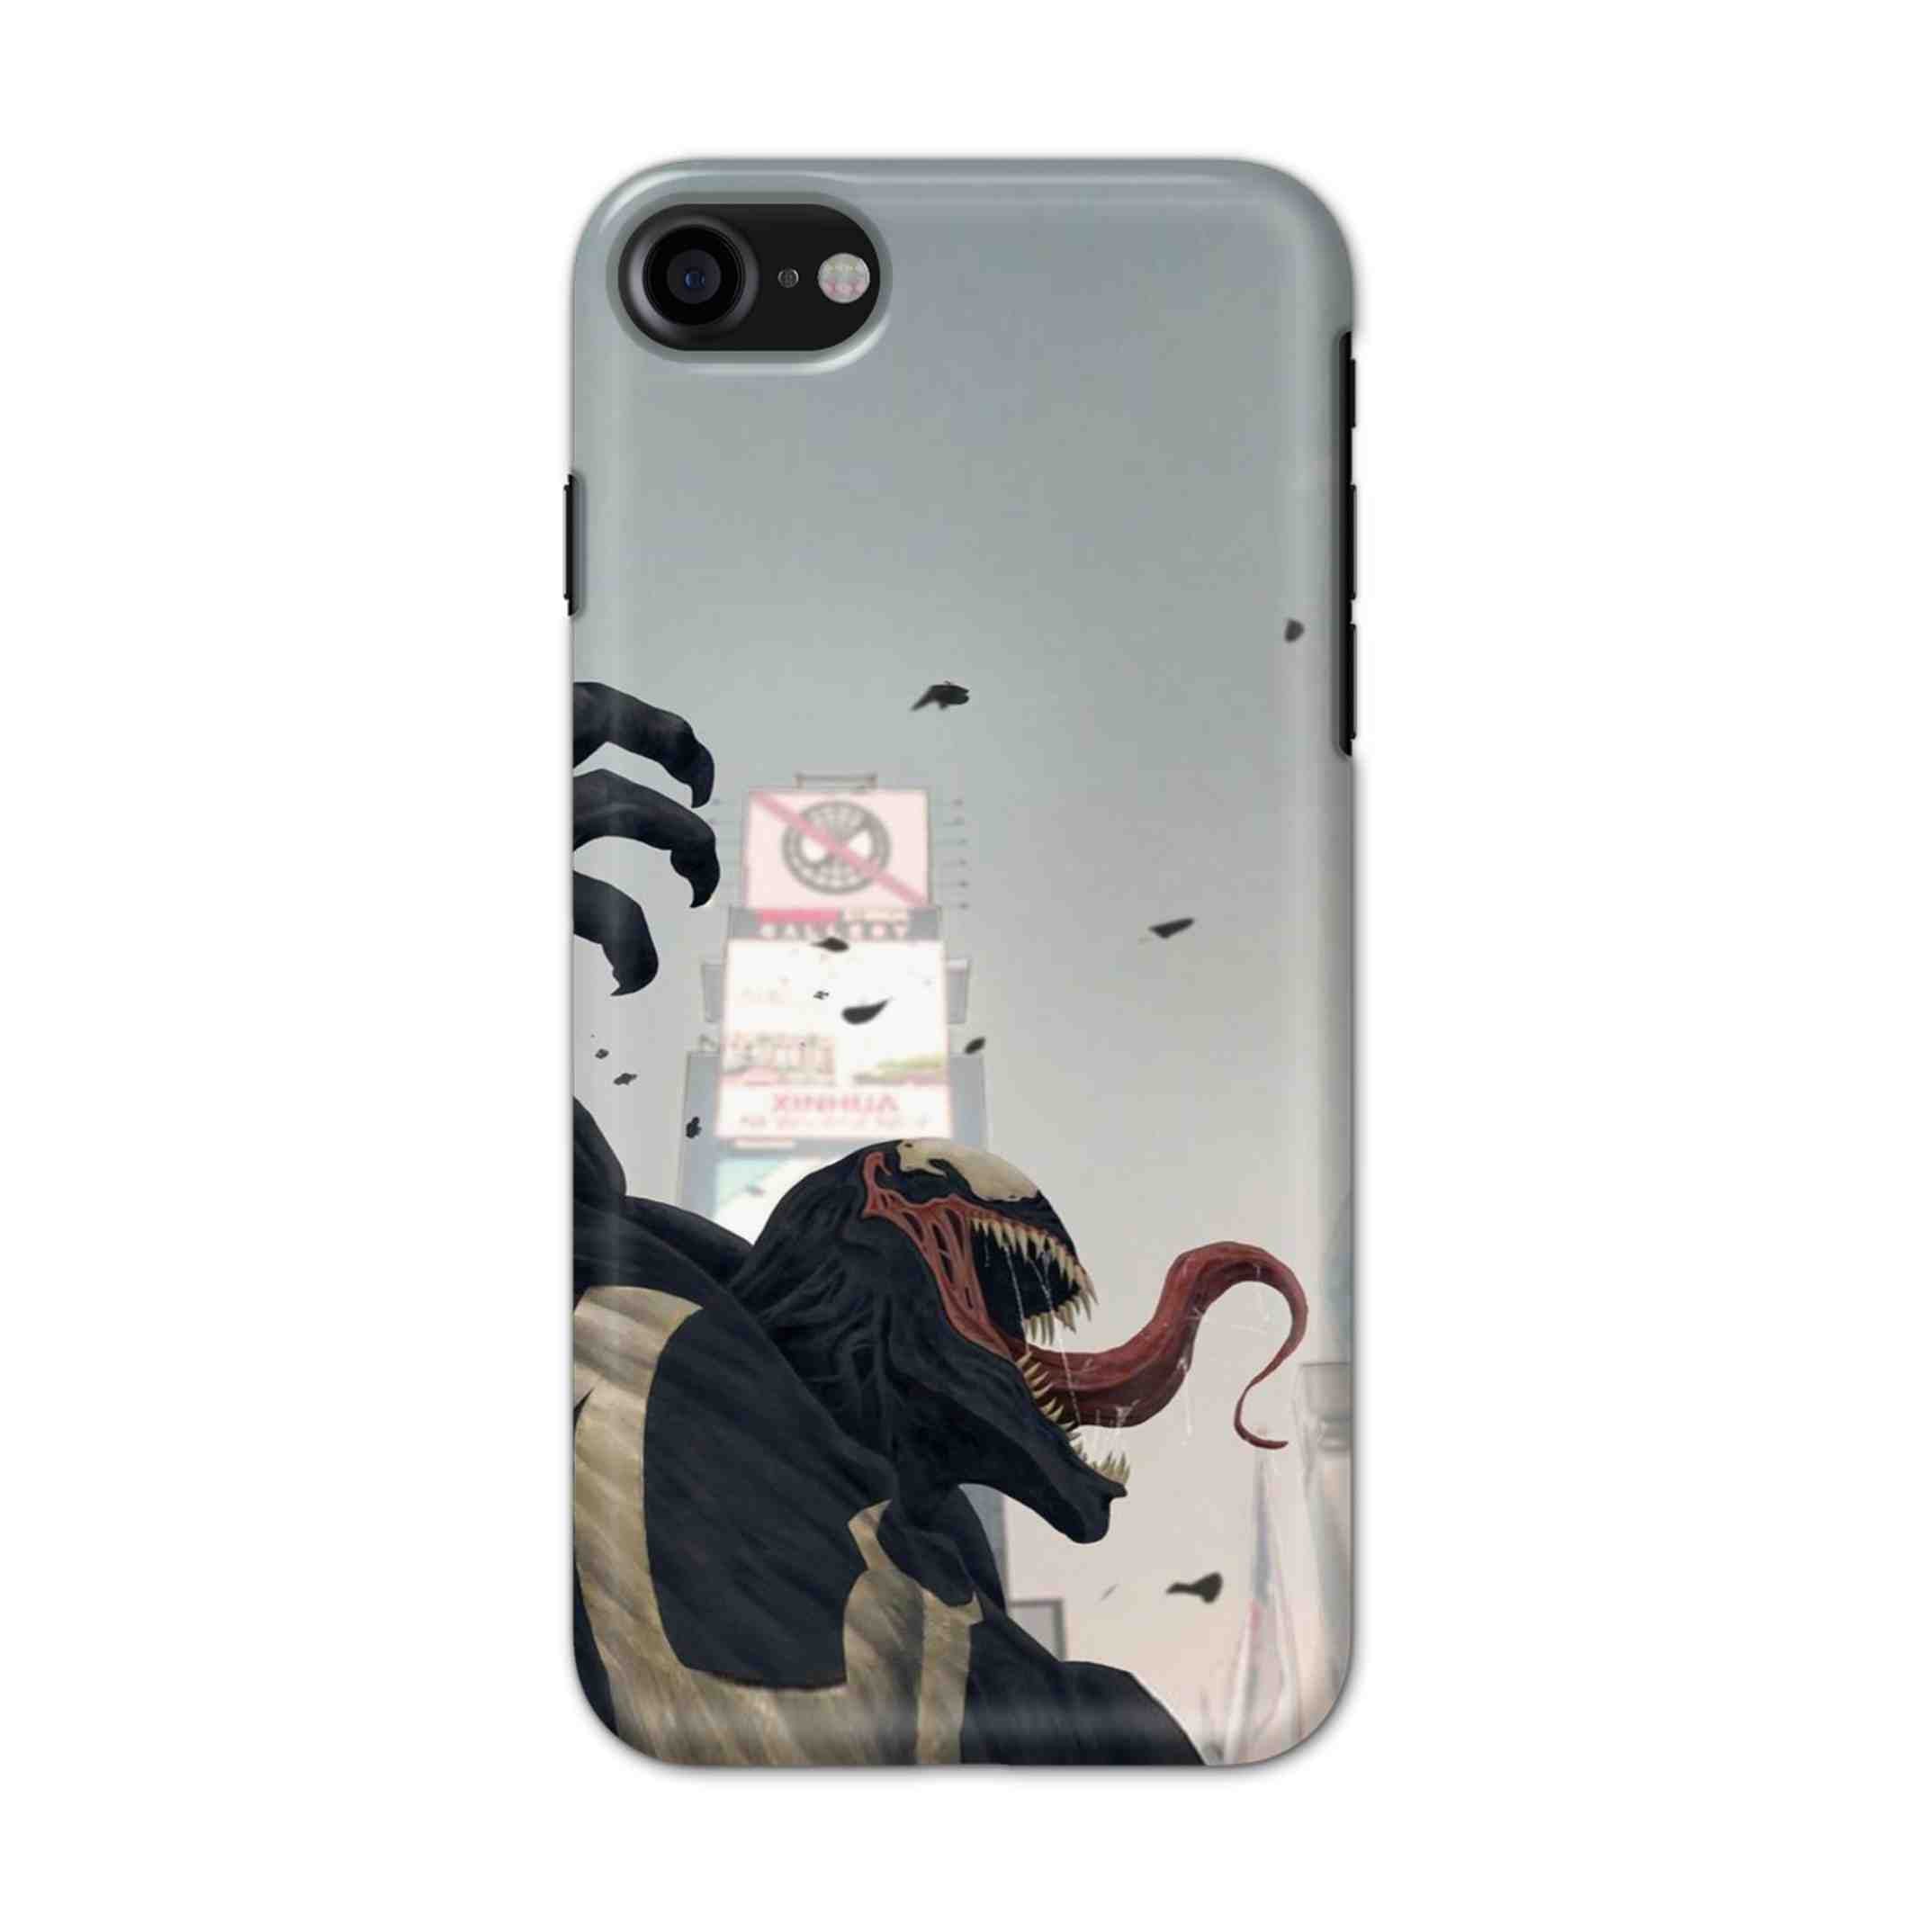 Buy Venom Crunch Hard Back Mobile Phone Case/Cover For iPhone 7 / 8 Online